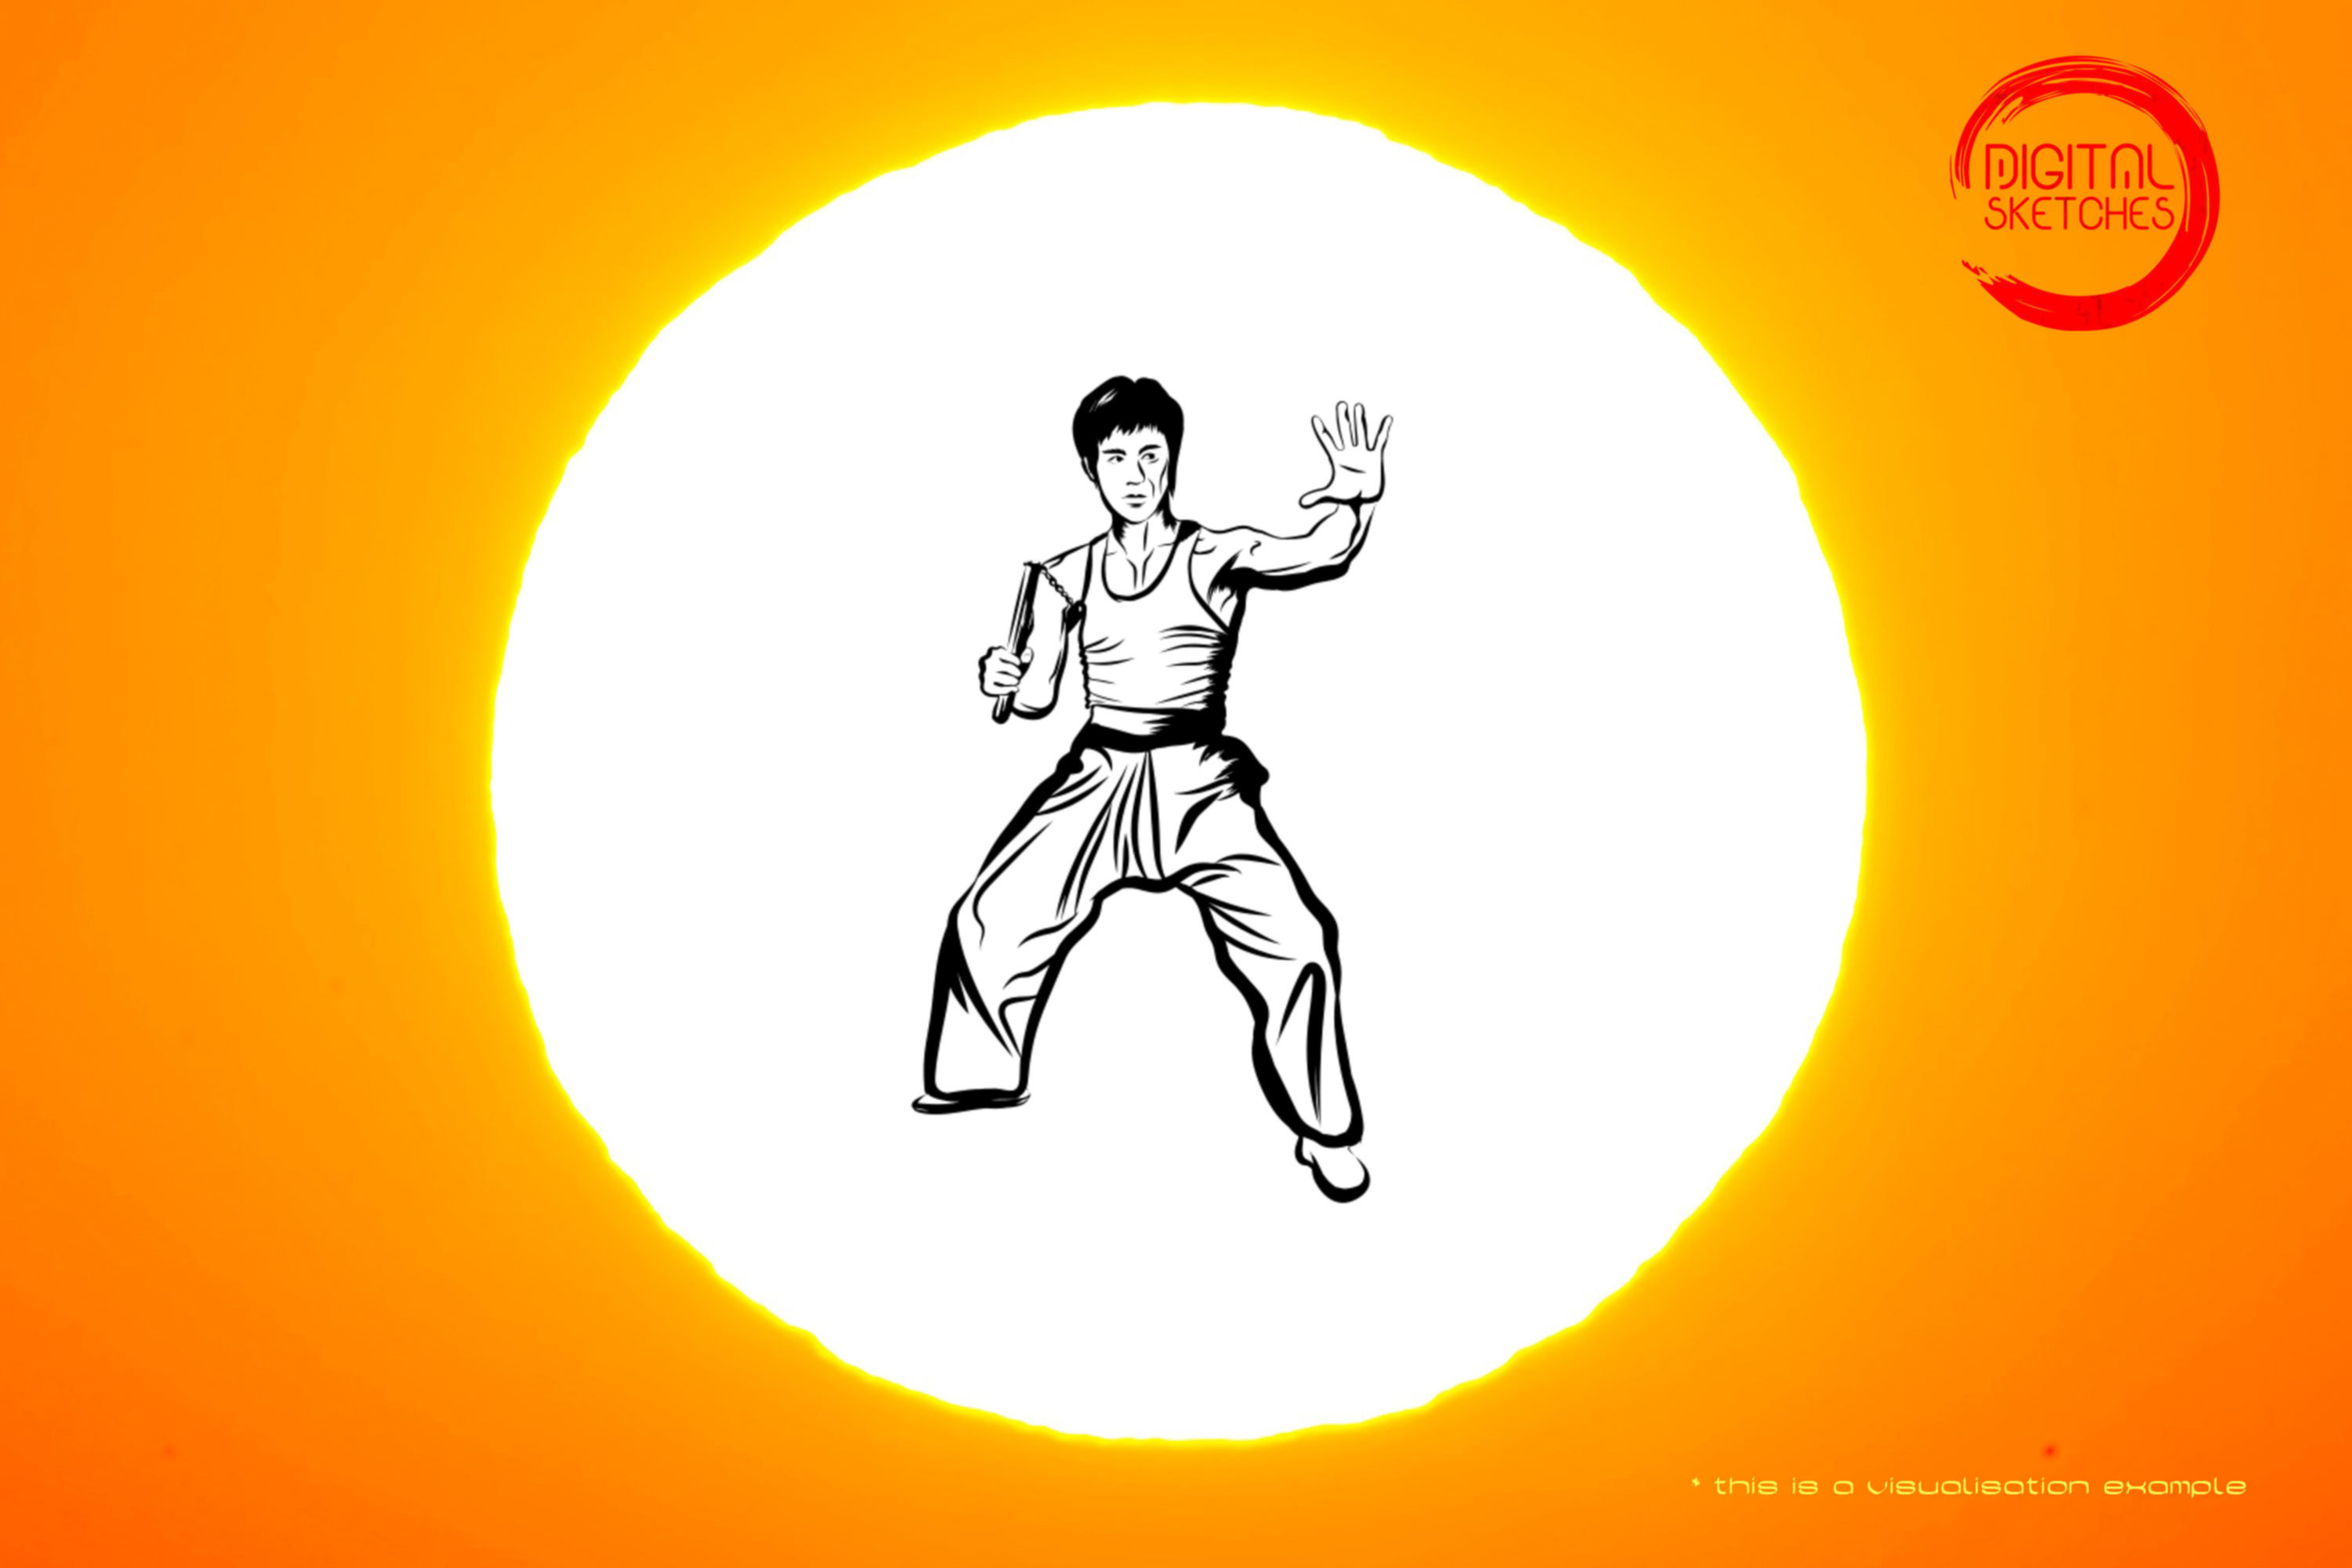  Tribute To Jeet Kune Do Self-Defence Martial Artist Lee Jun-fan aka Bruce Lee Drawing Art